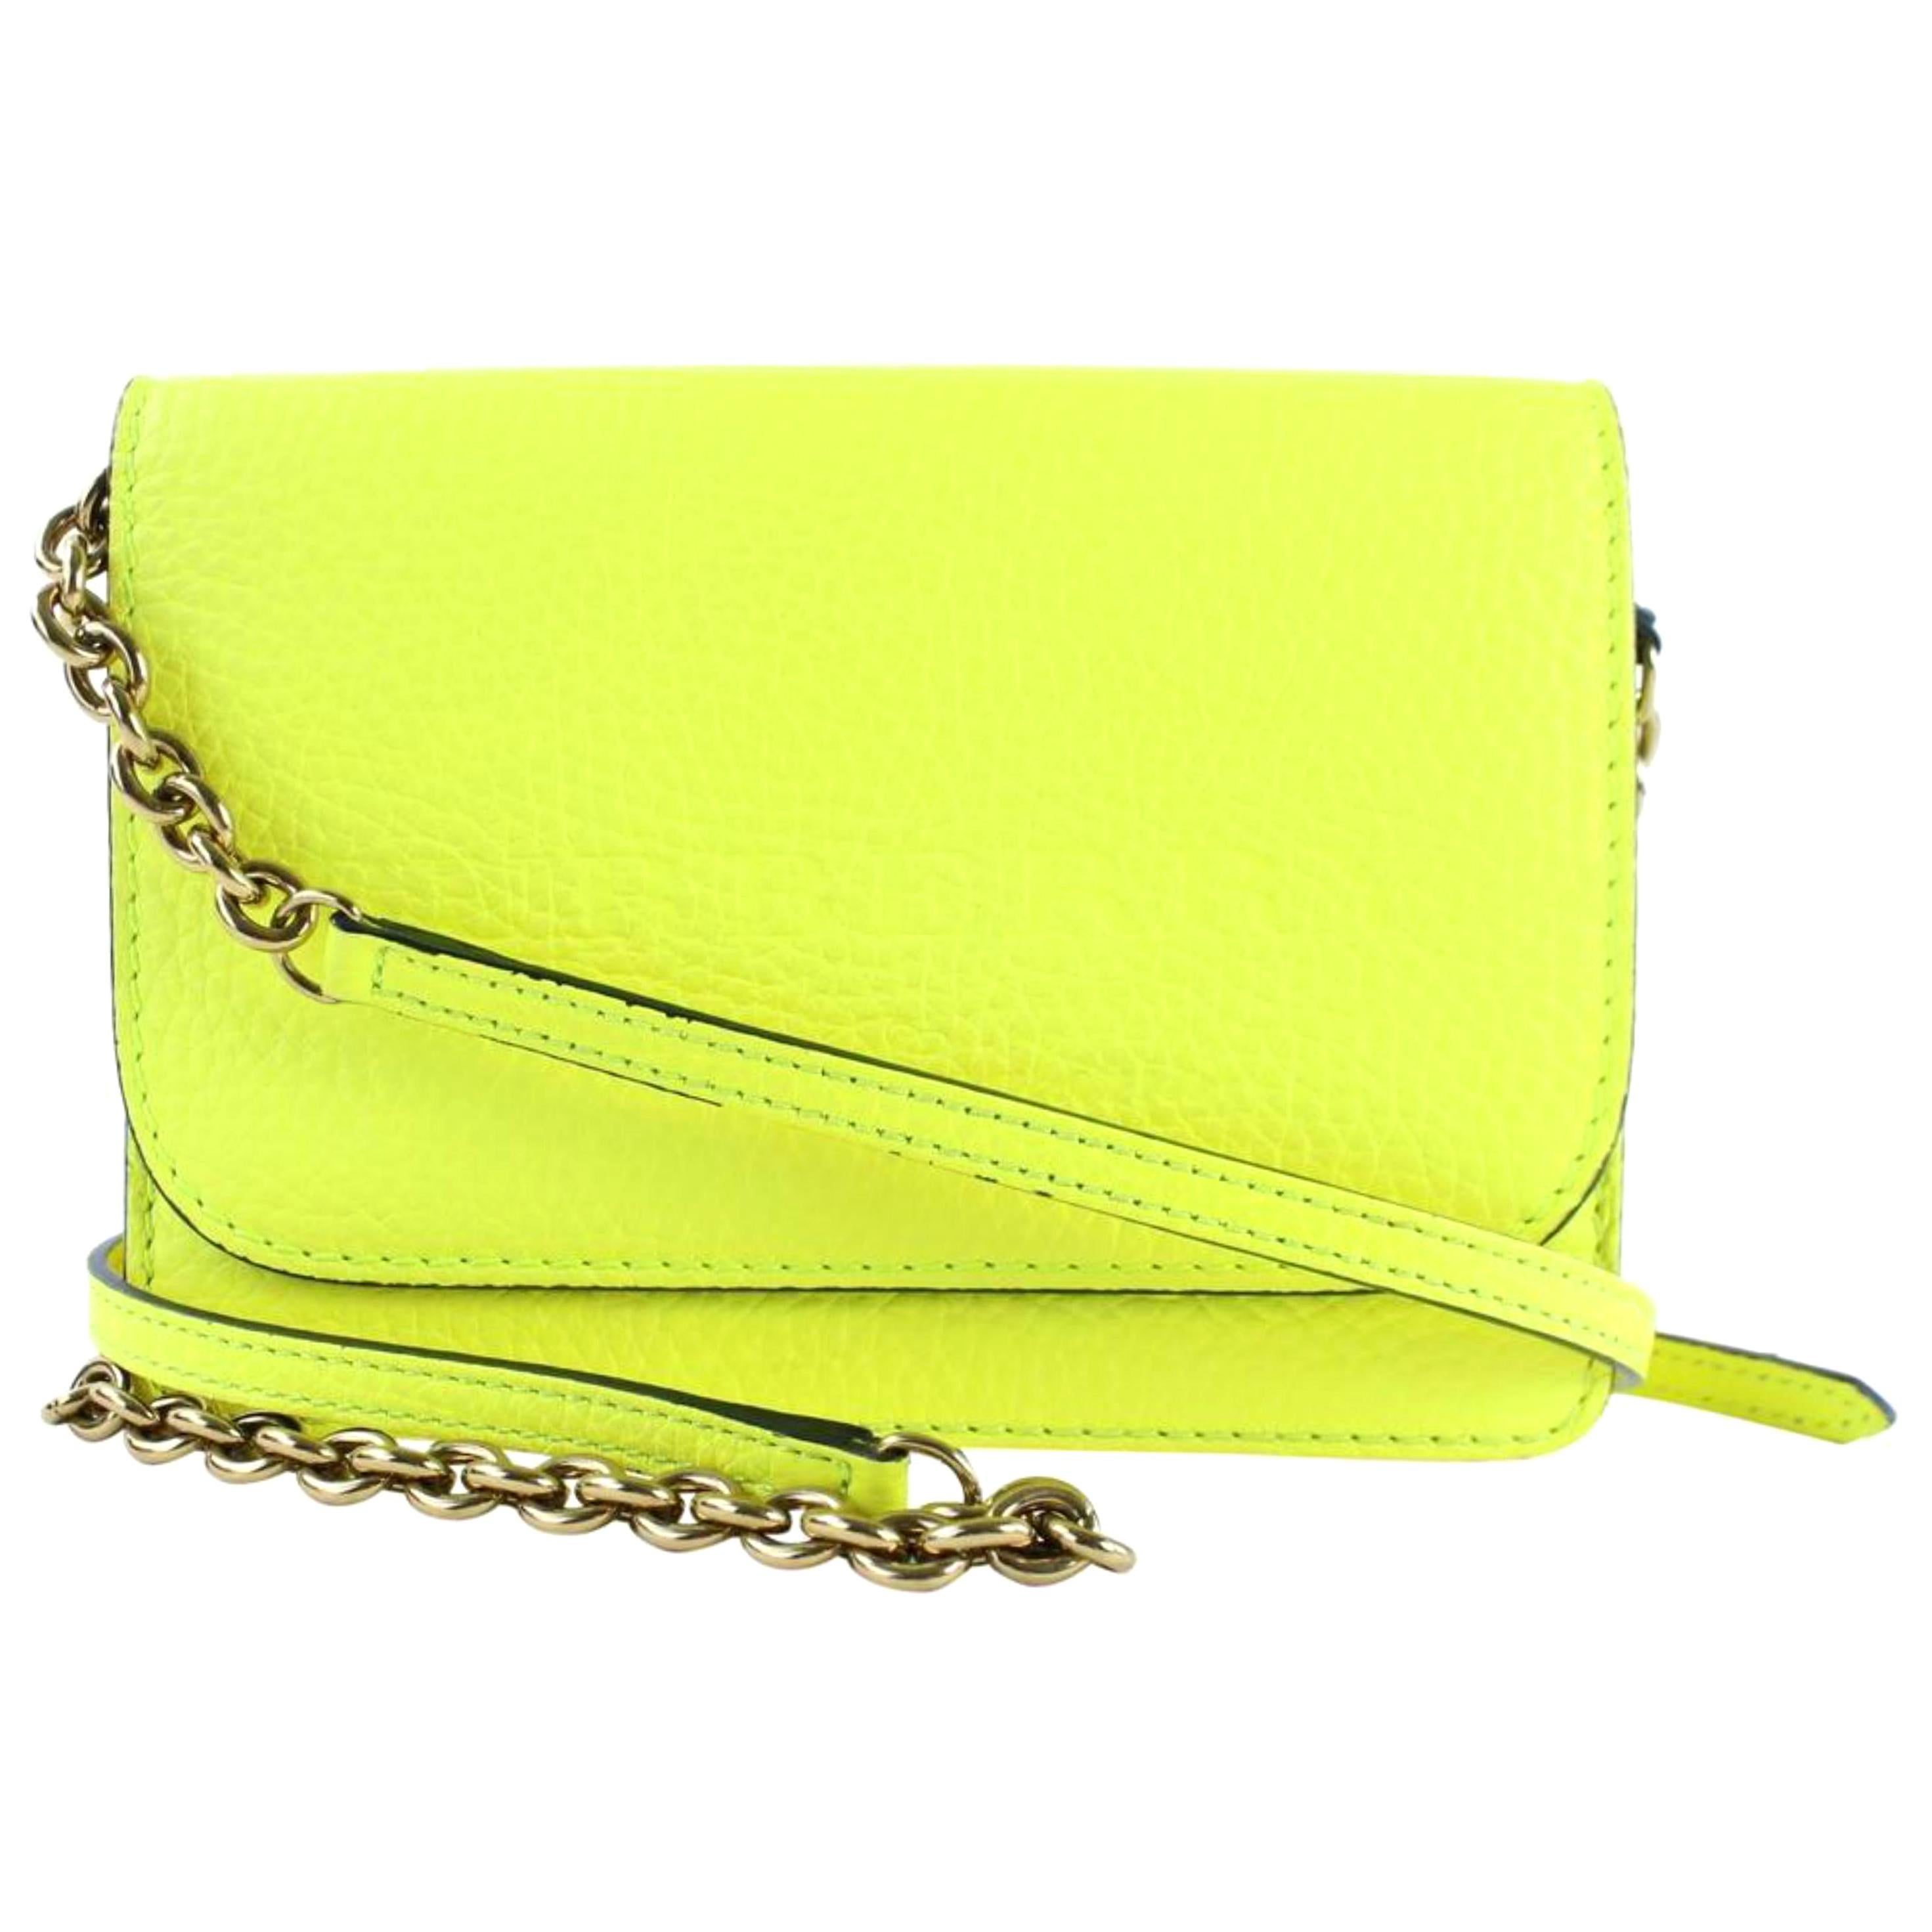 Burberry Wallet on Chain Neon  1burz0817 Yellow Leather Cross Body Bag